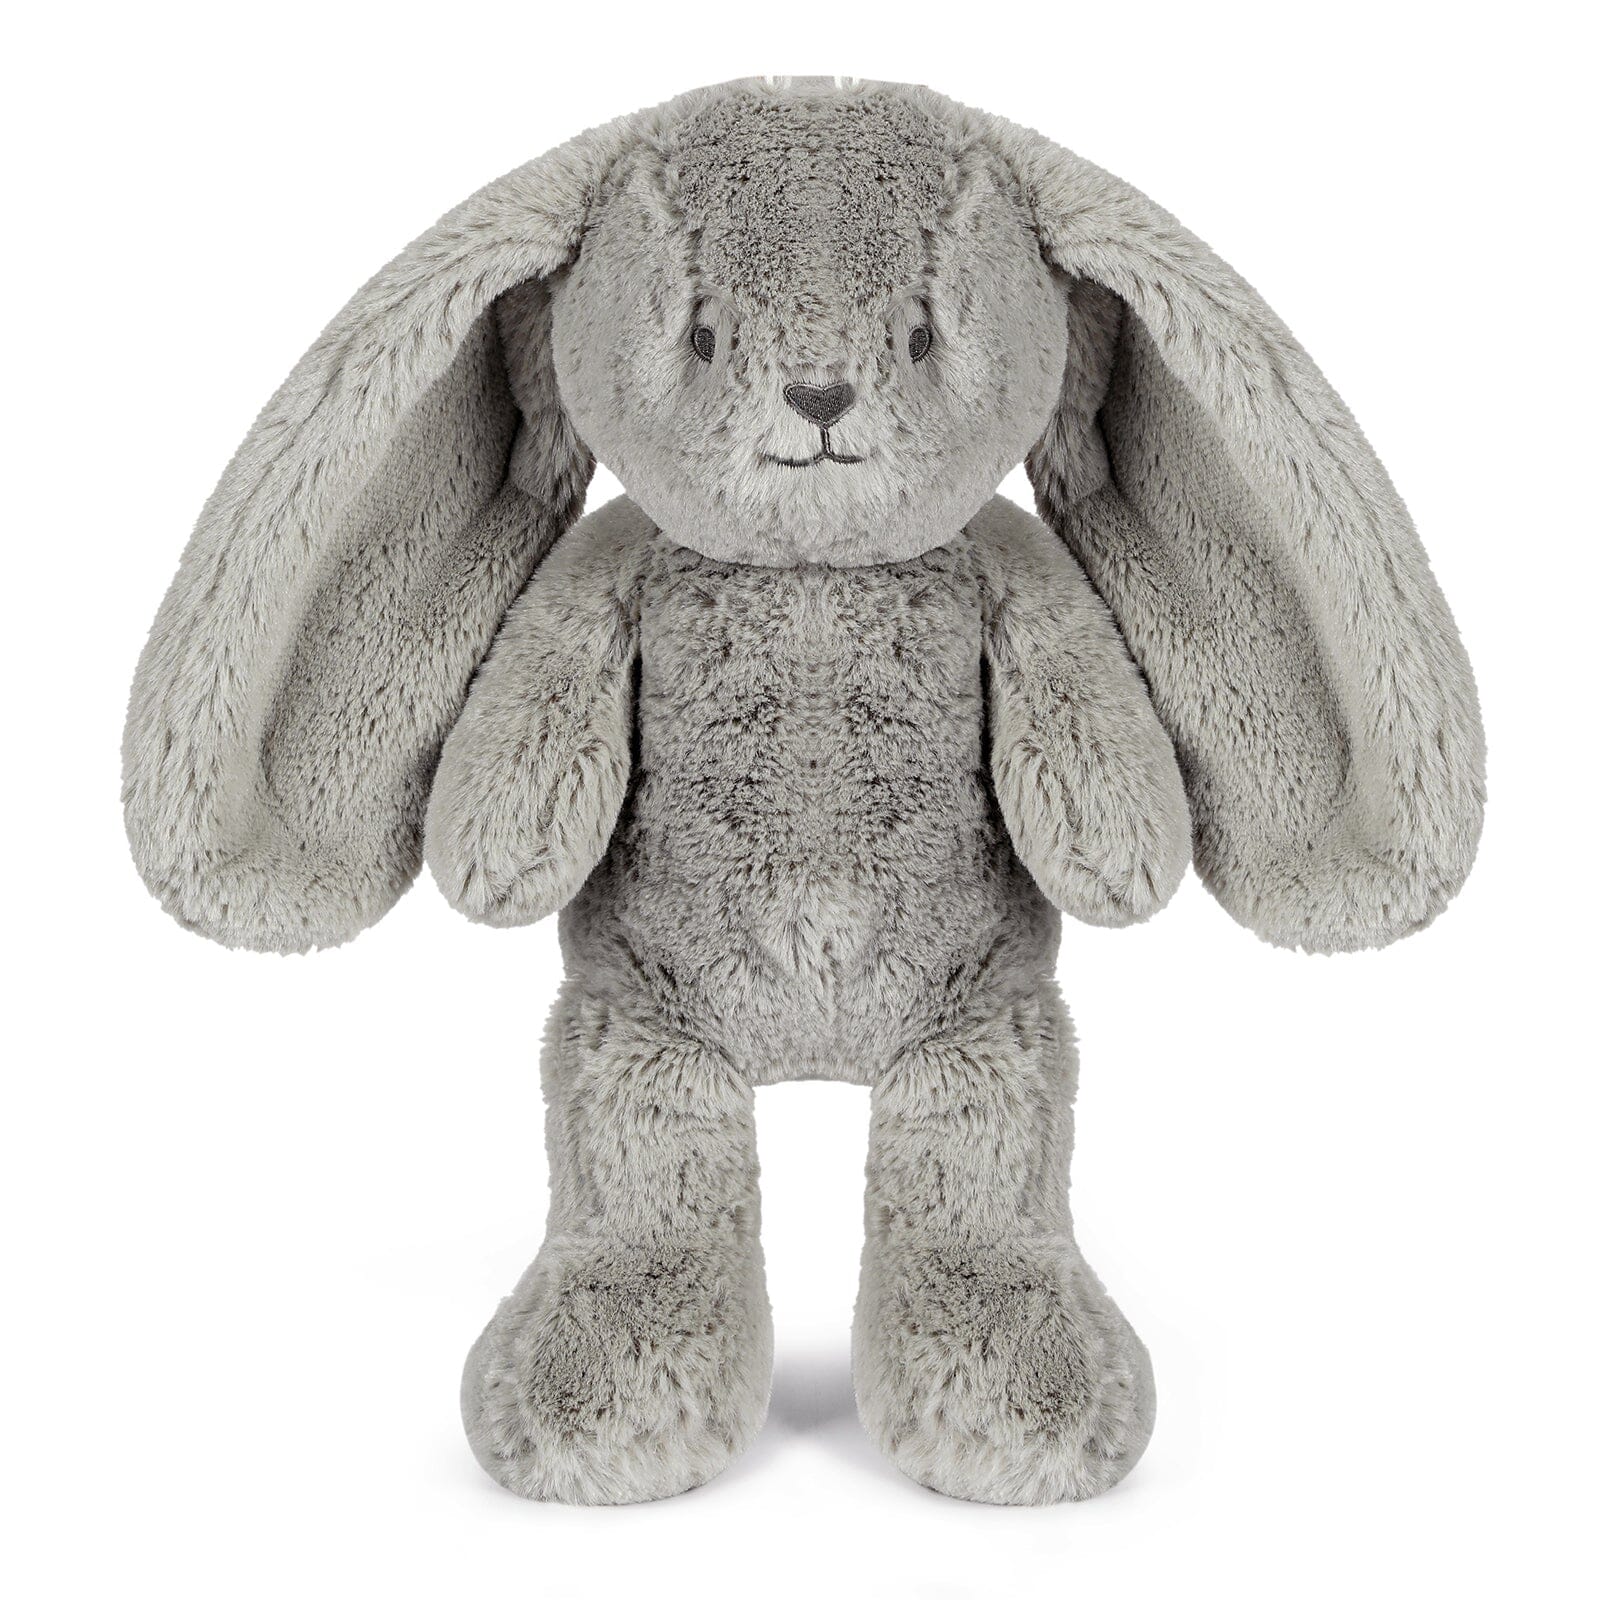 Bodhi Bunny Soft Toy - Grey